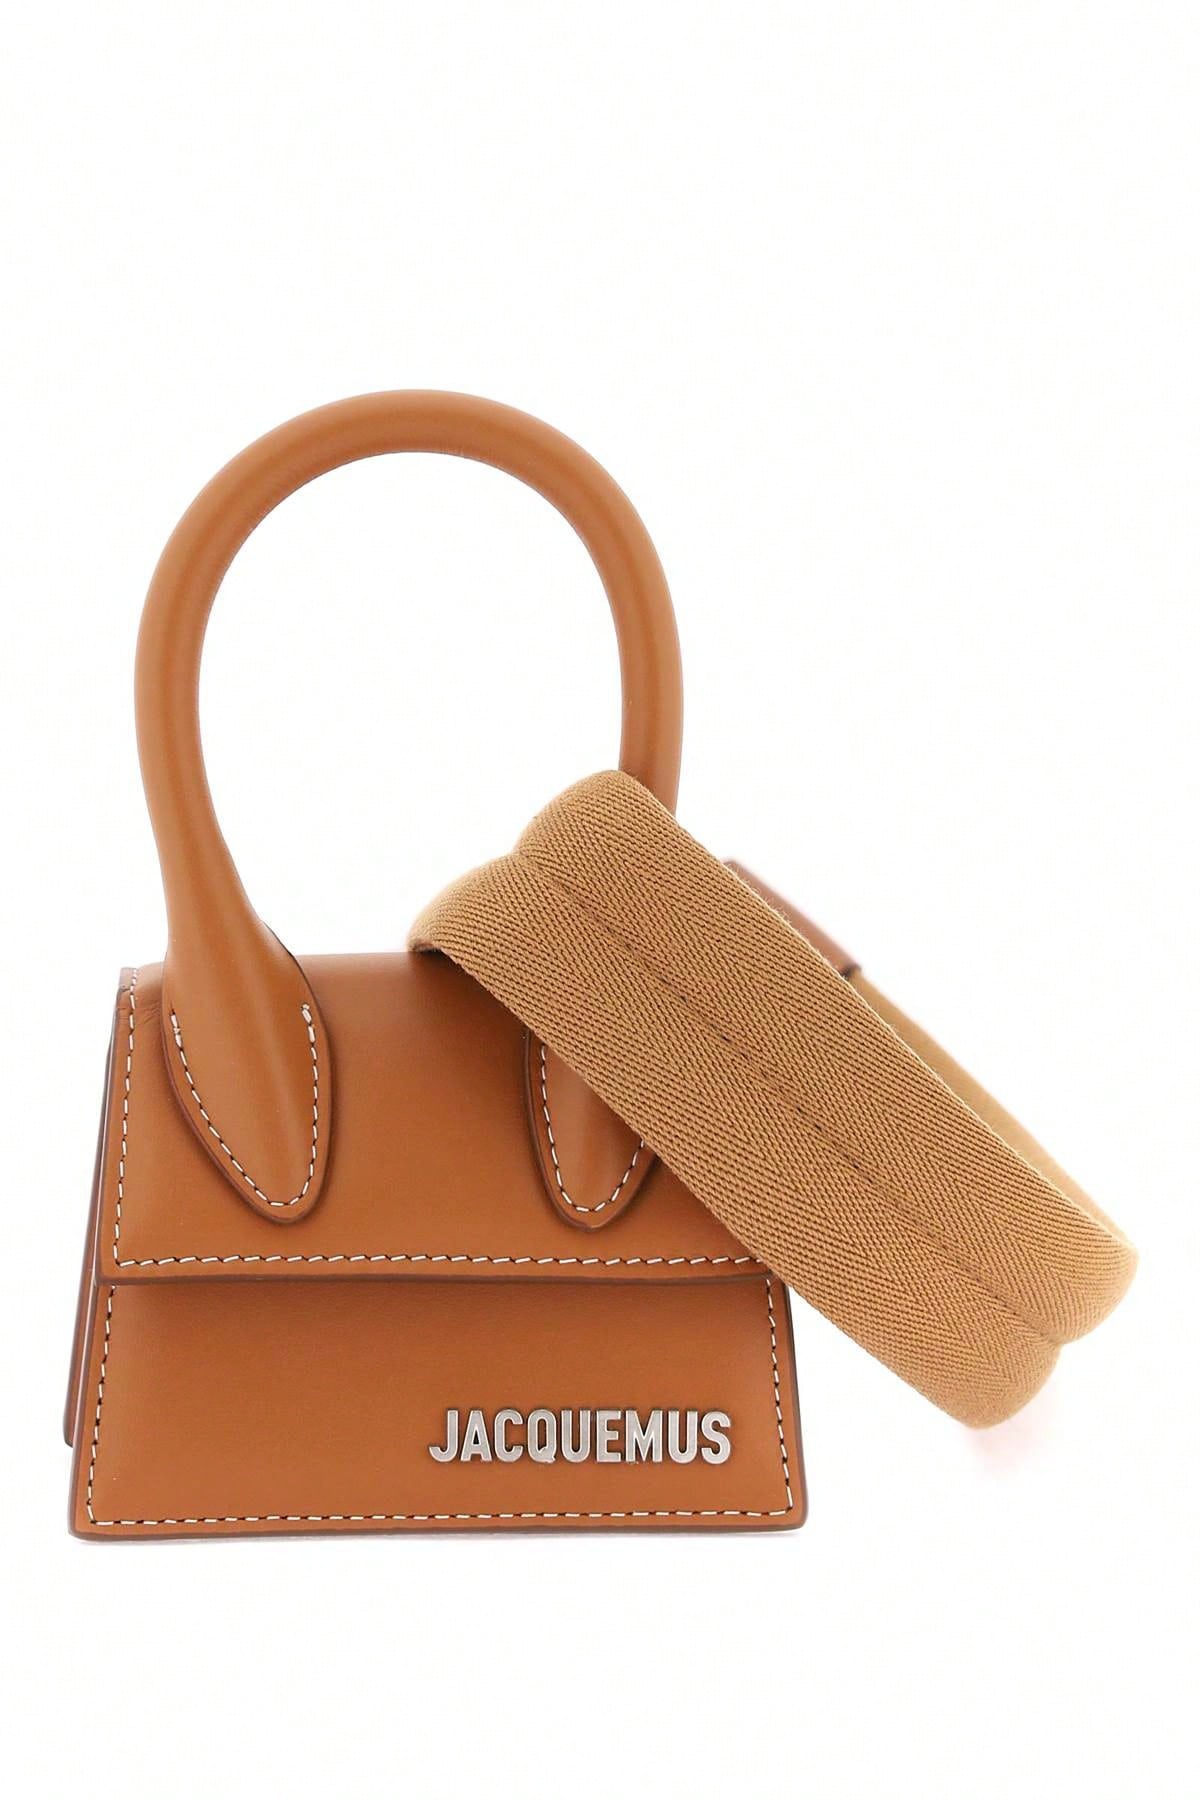 Jacquemus Мини-сумка Jacquemus 'Le Chiquito', черный